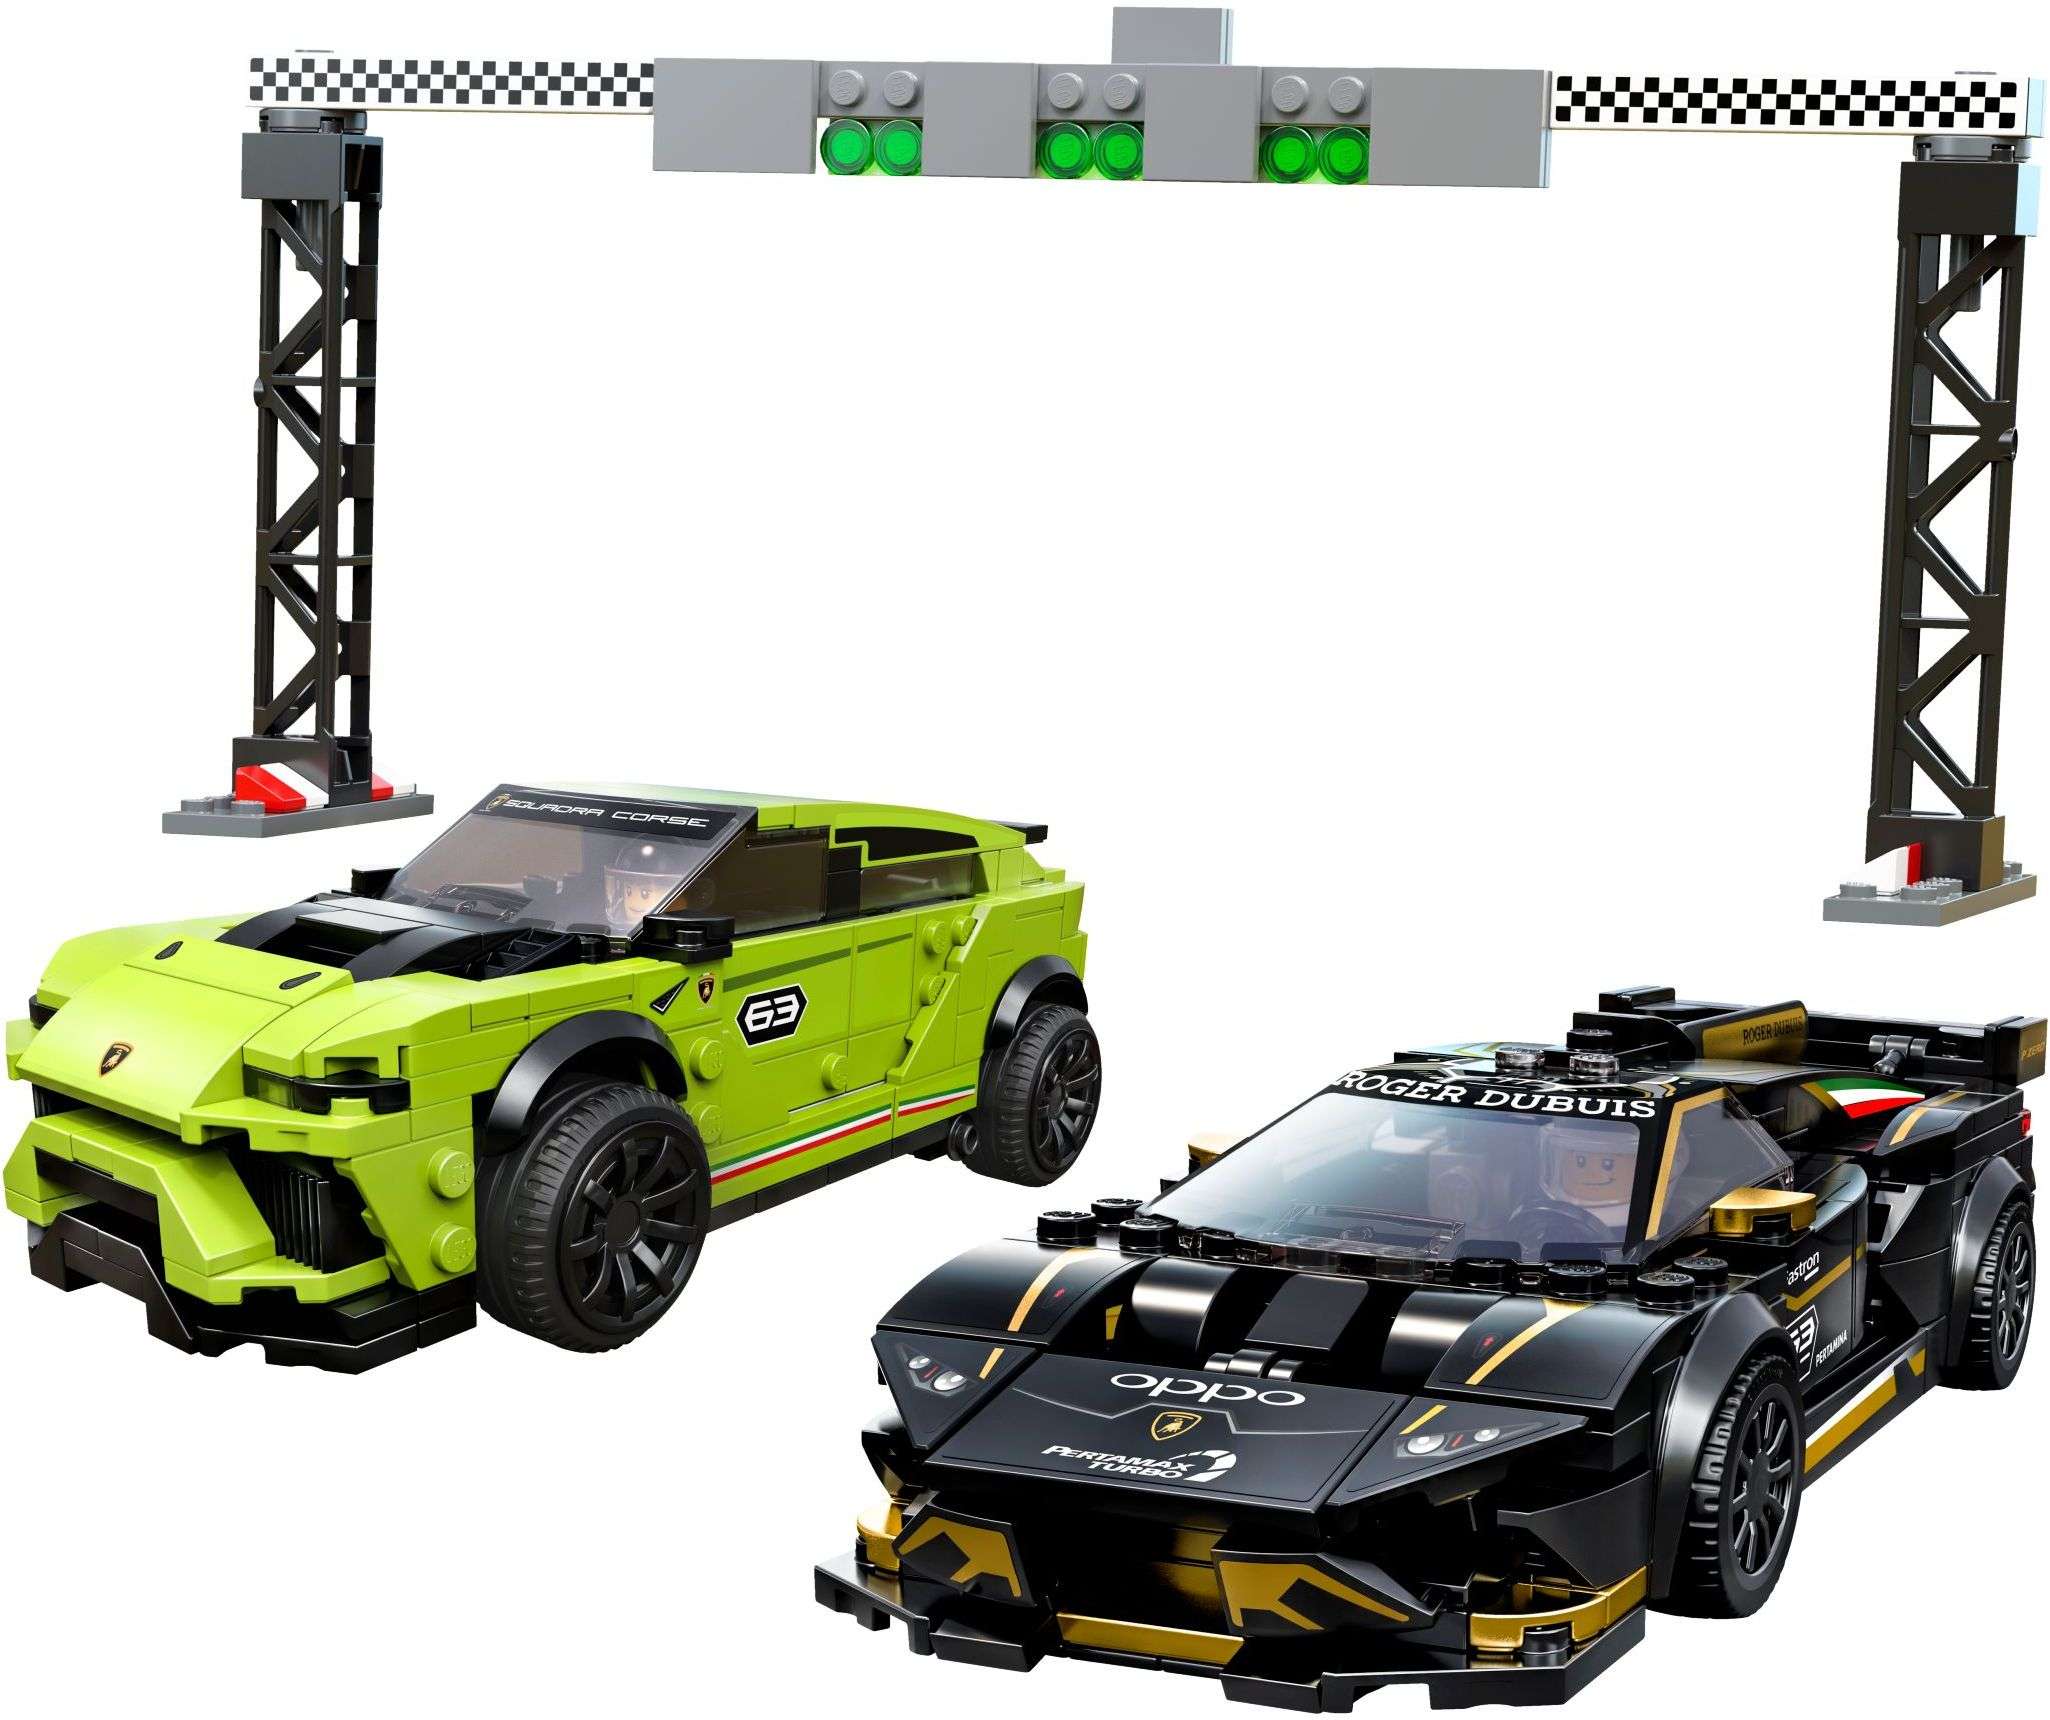 LEGO Speed Champions - Lamborghini Urus ST-X & Lamborghini Huracán Super Trofeo EVO (76899)